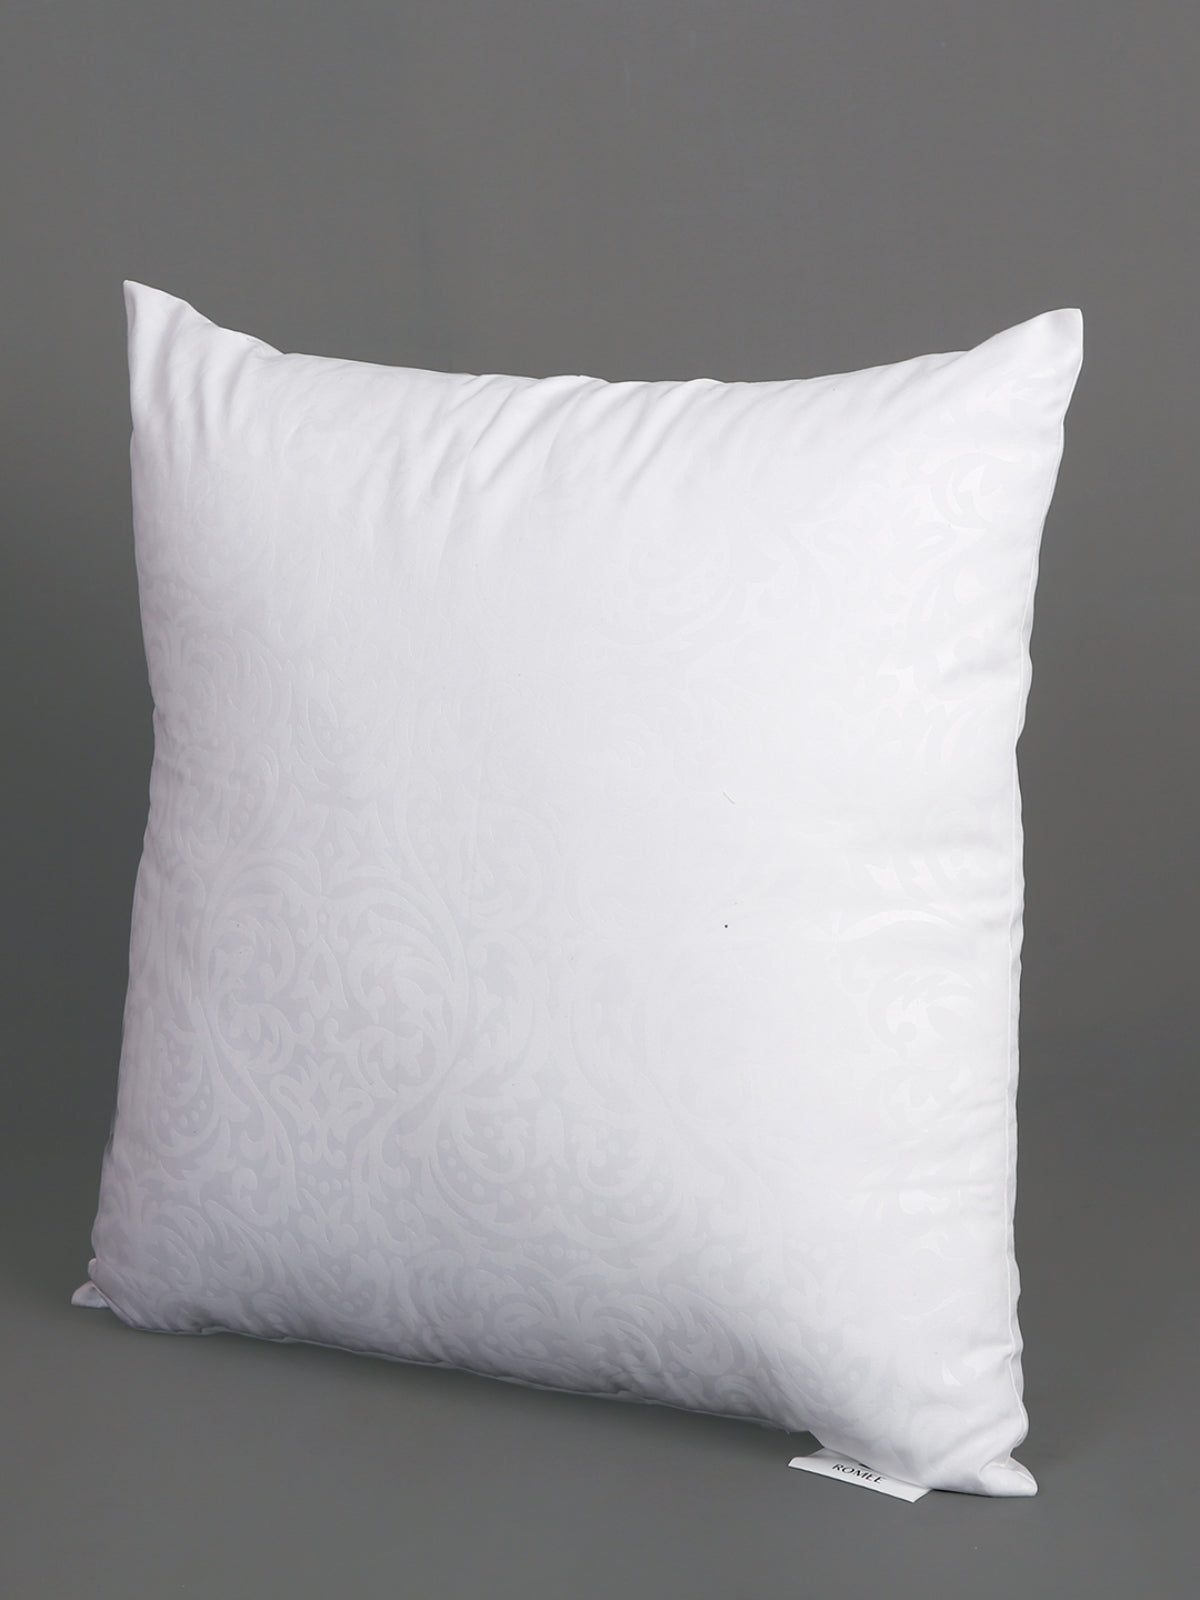 White Set of 3 Cushions